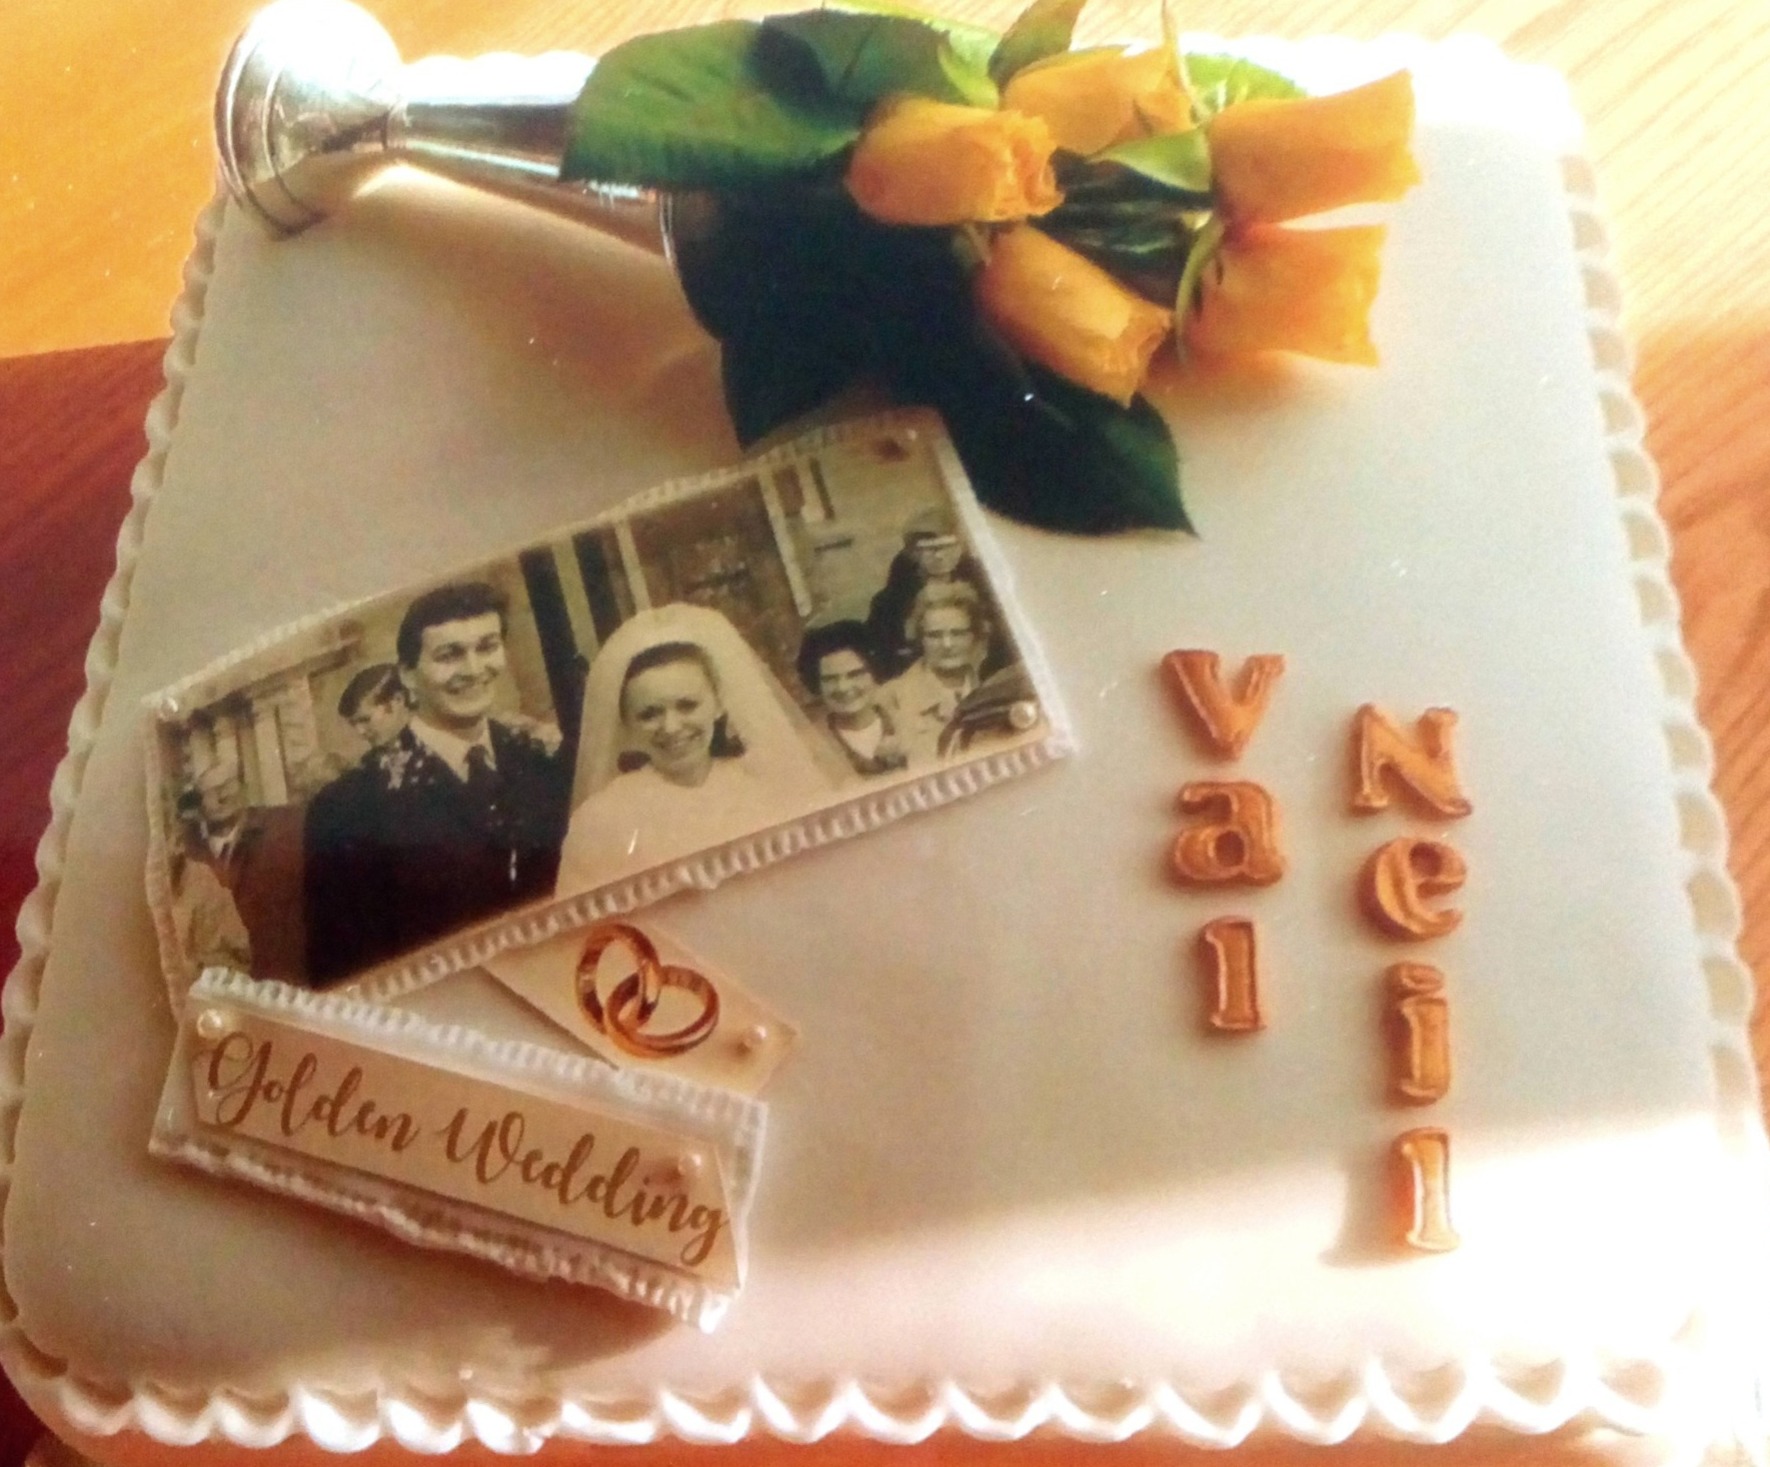 golden wedding anniversary cake with fresh flowers